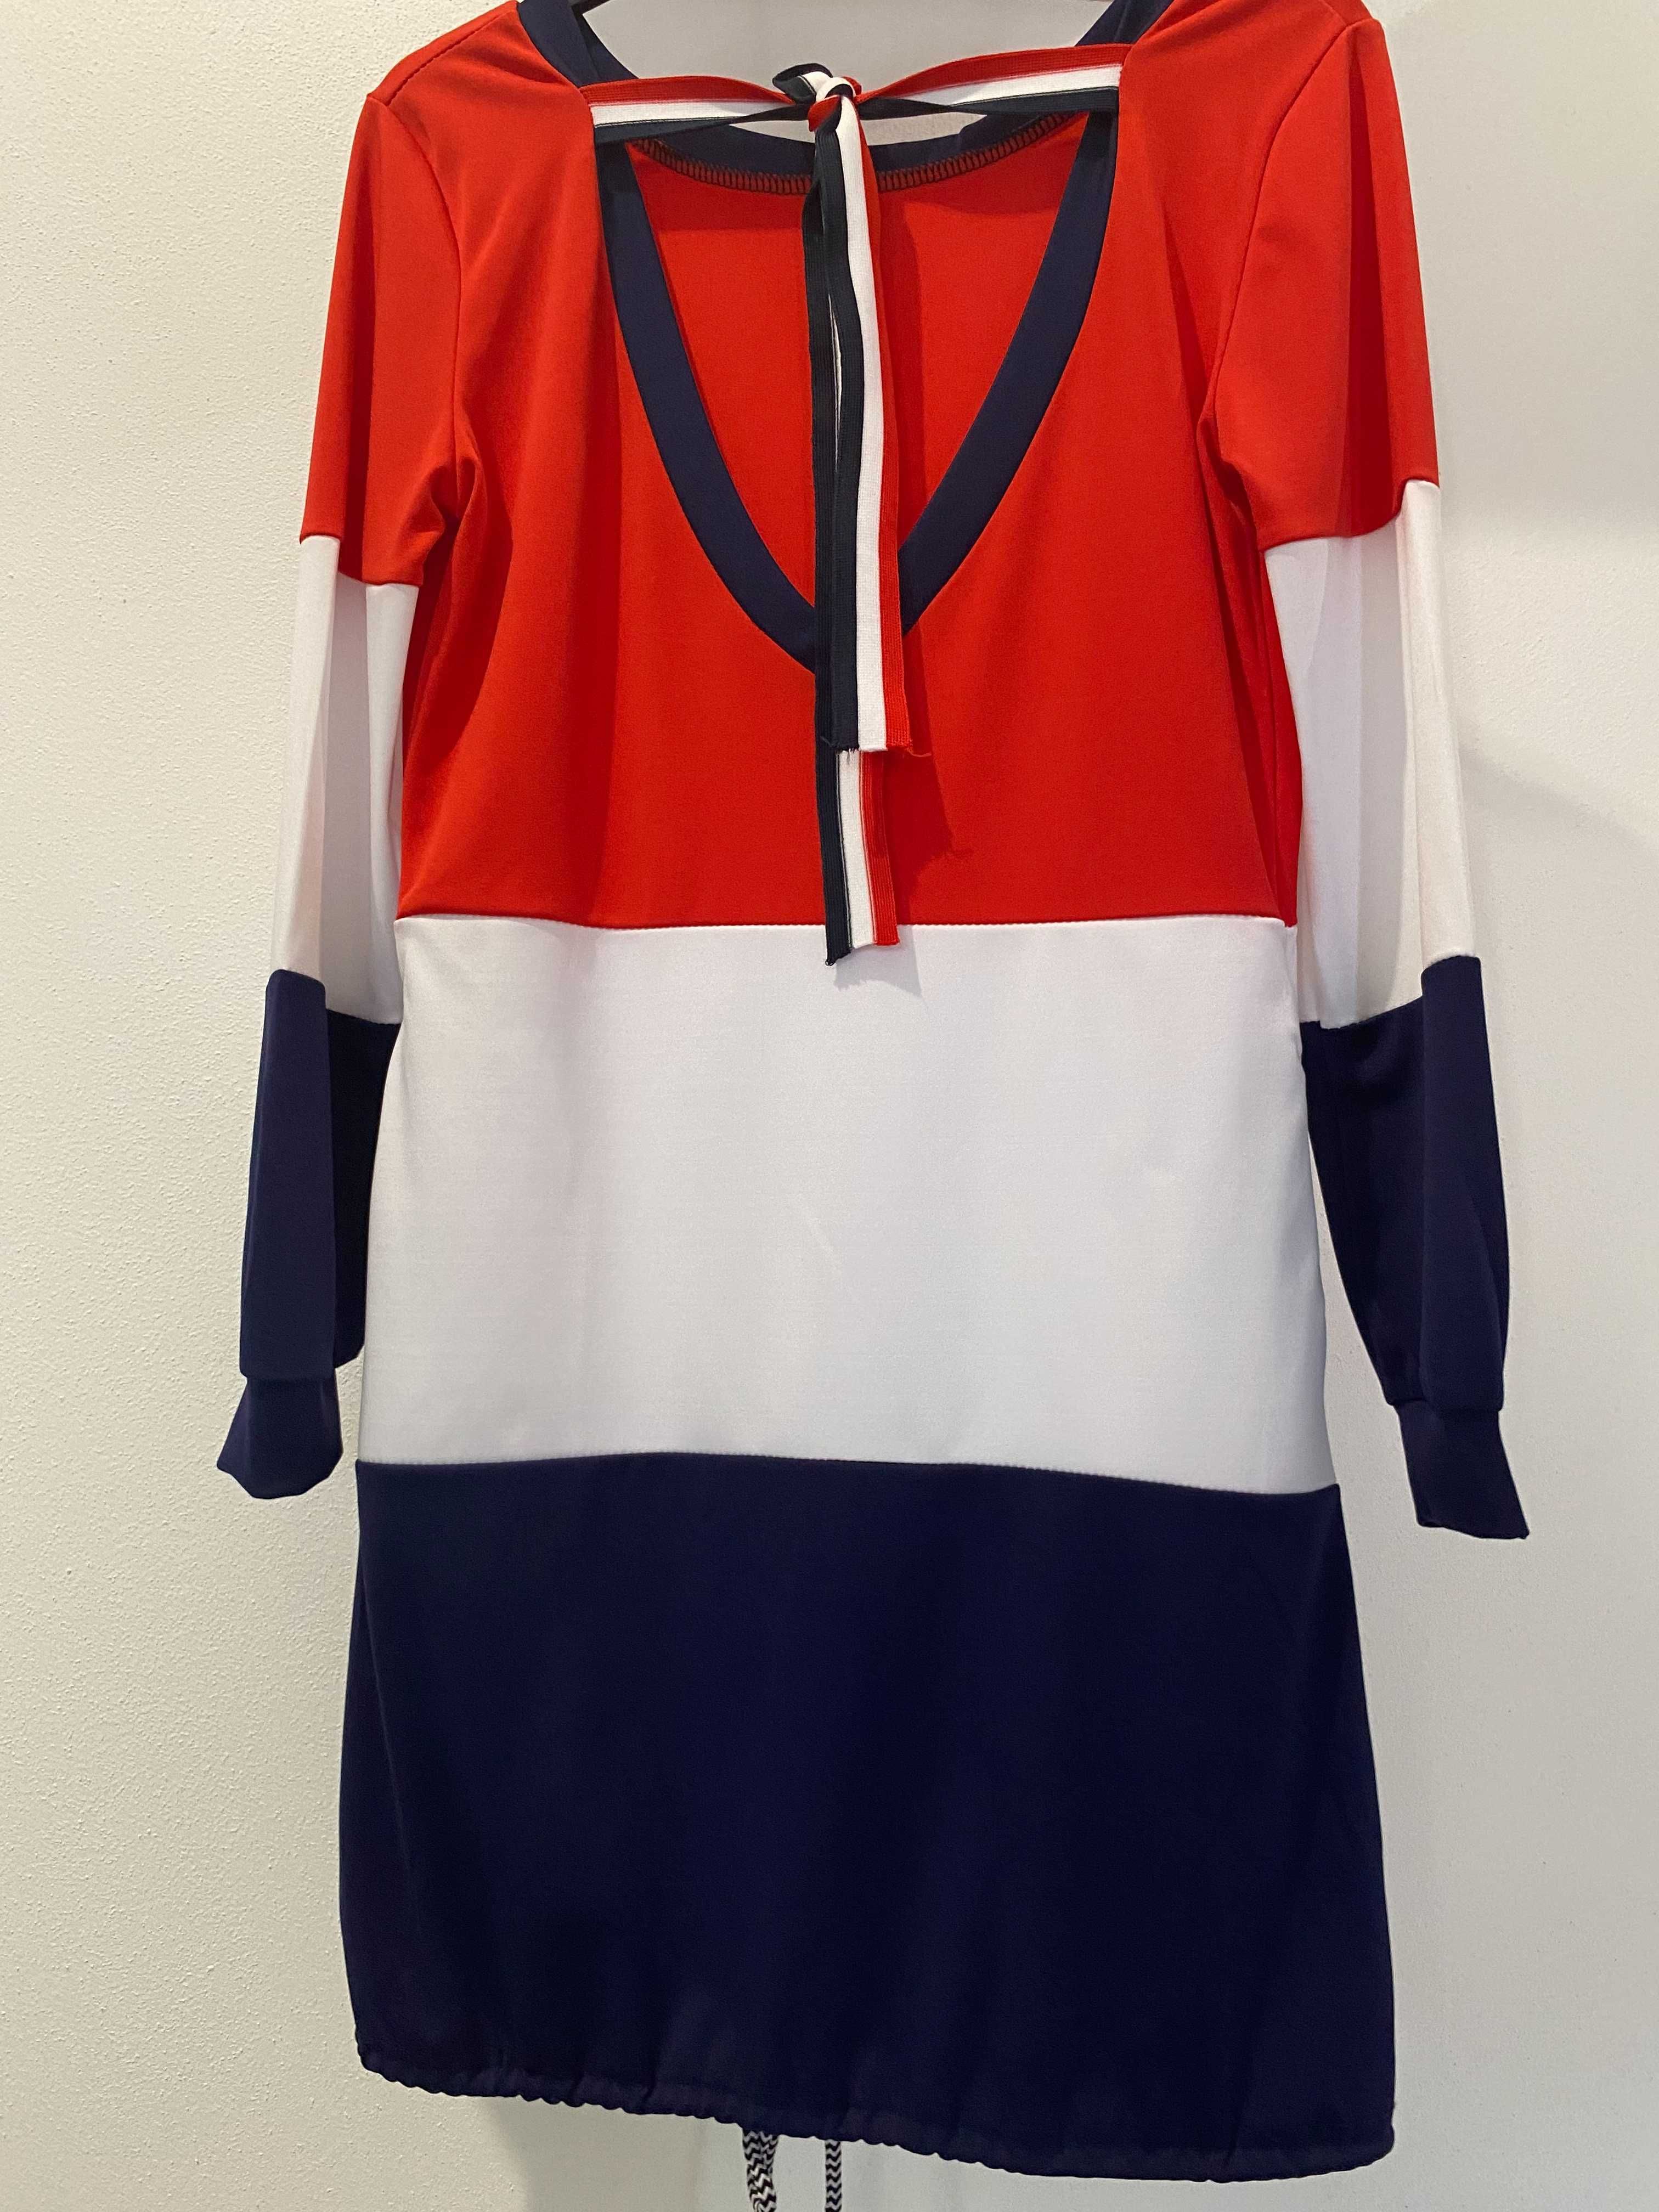 Tricou lung/rochie de vara, subtire, nou, marime S, rosu+alb+bleumarin